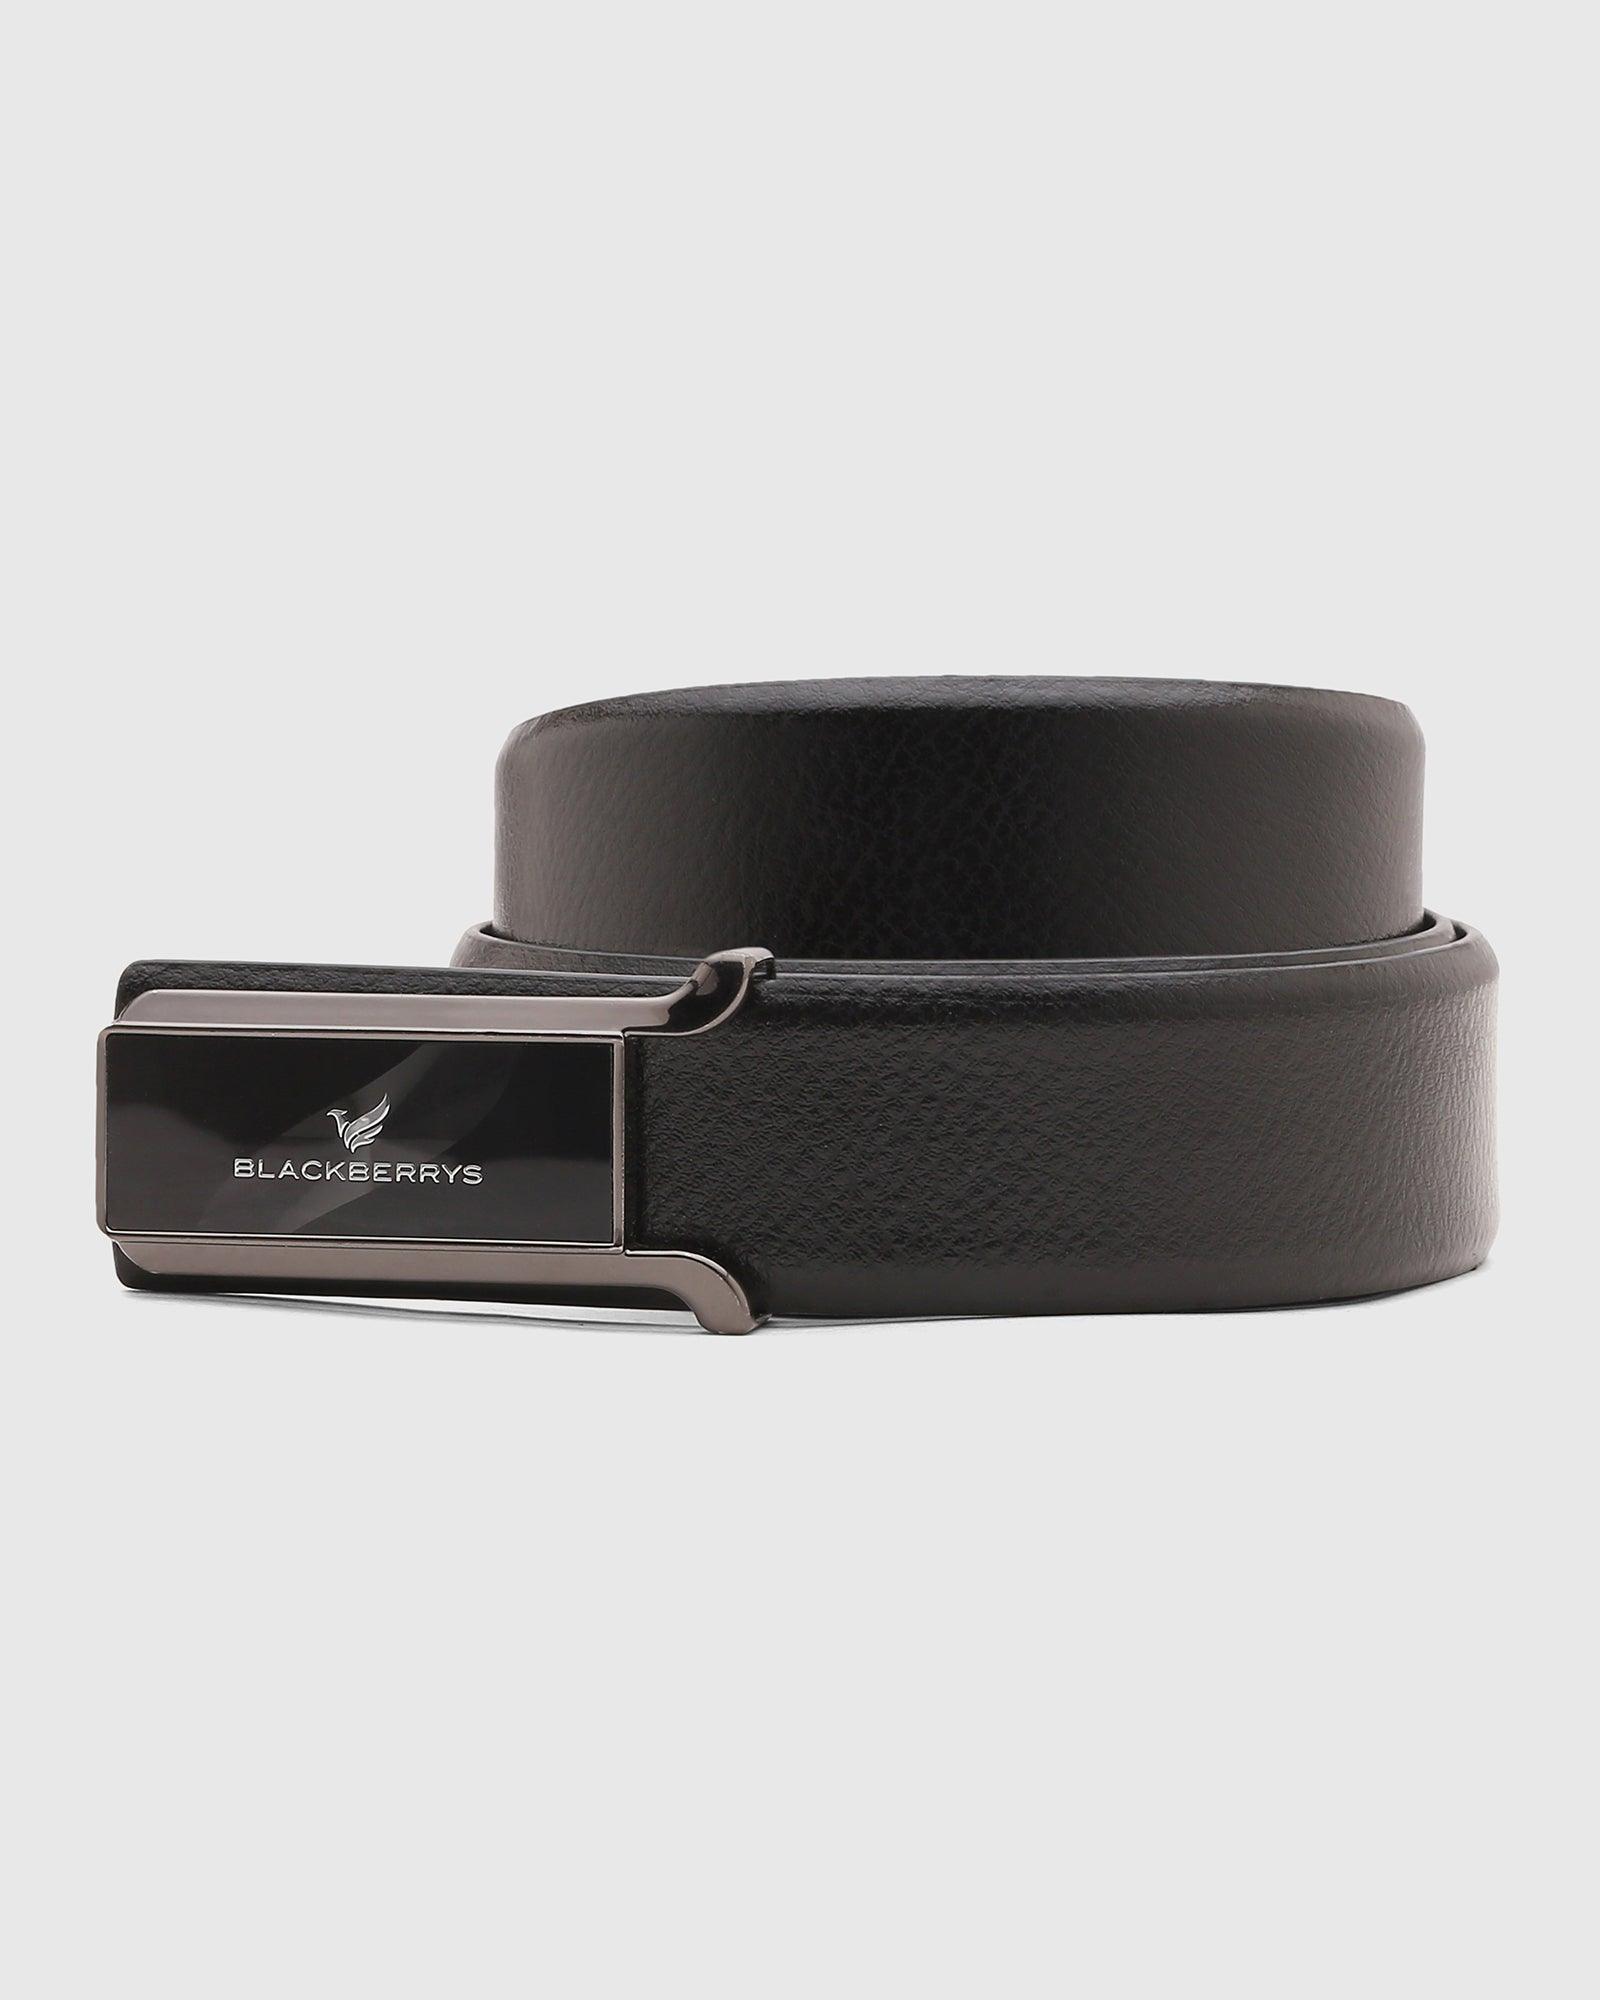 Customized Alloy Black Italian Leather Belt, Gender : Male, Color